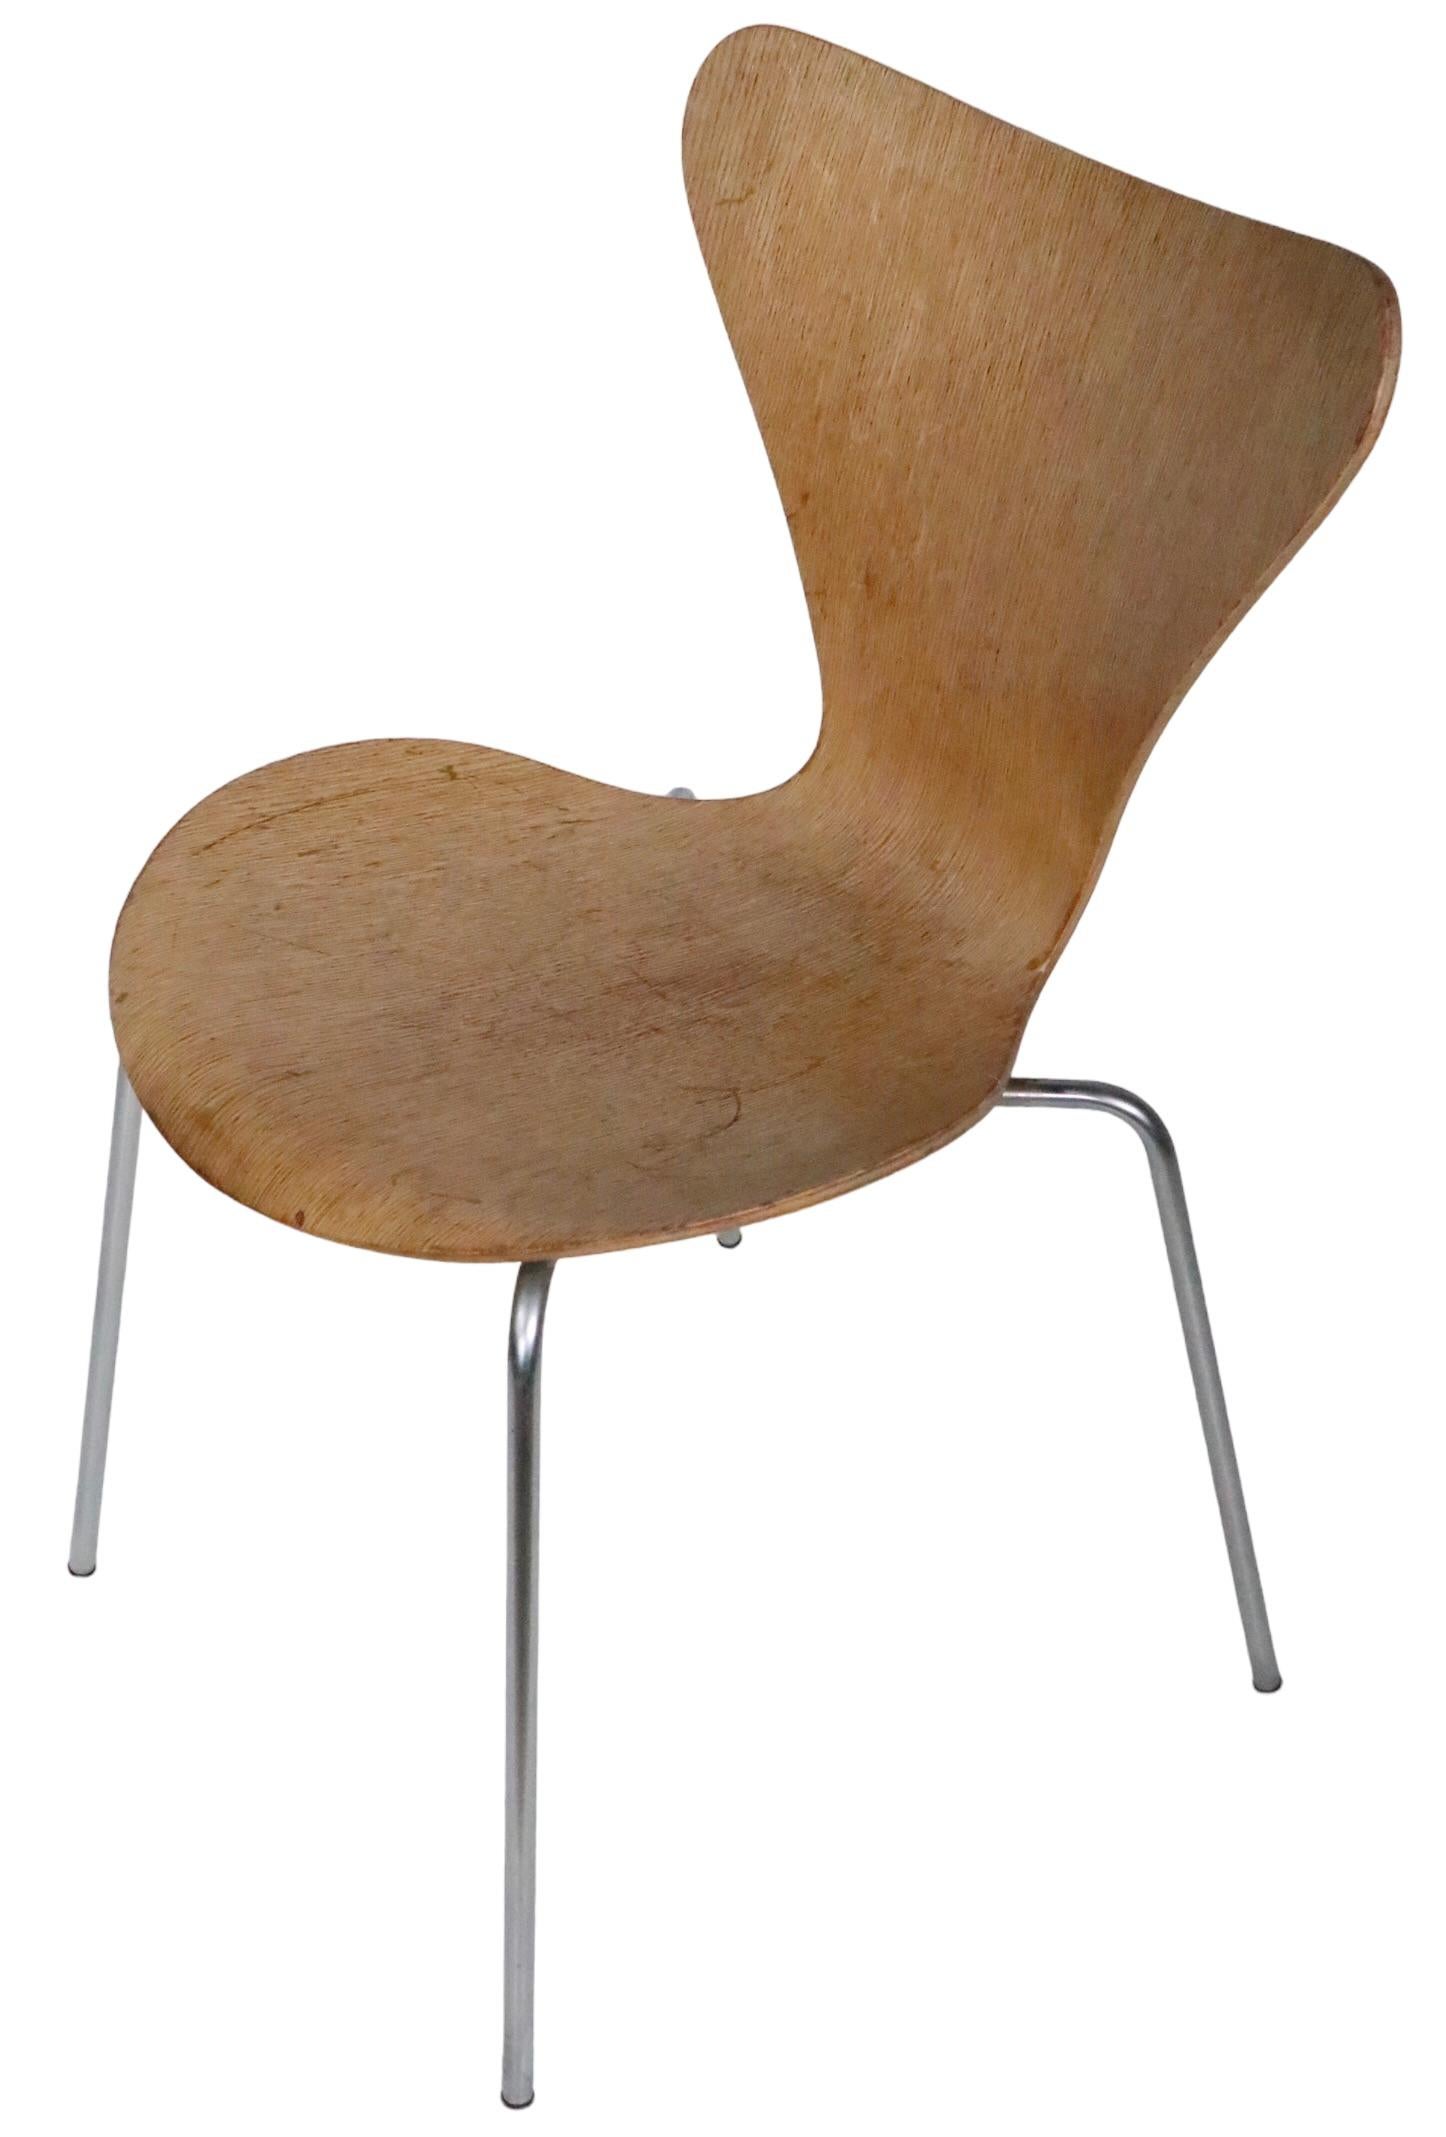 Arne Jacobsen Fritz Hansen Series 7 Butterfly Chair in Oak Veneer, circa 1960s For Sale 6